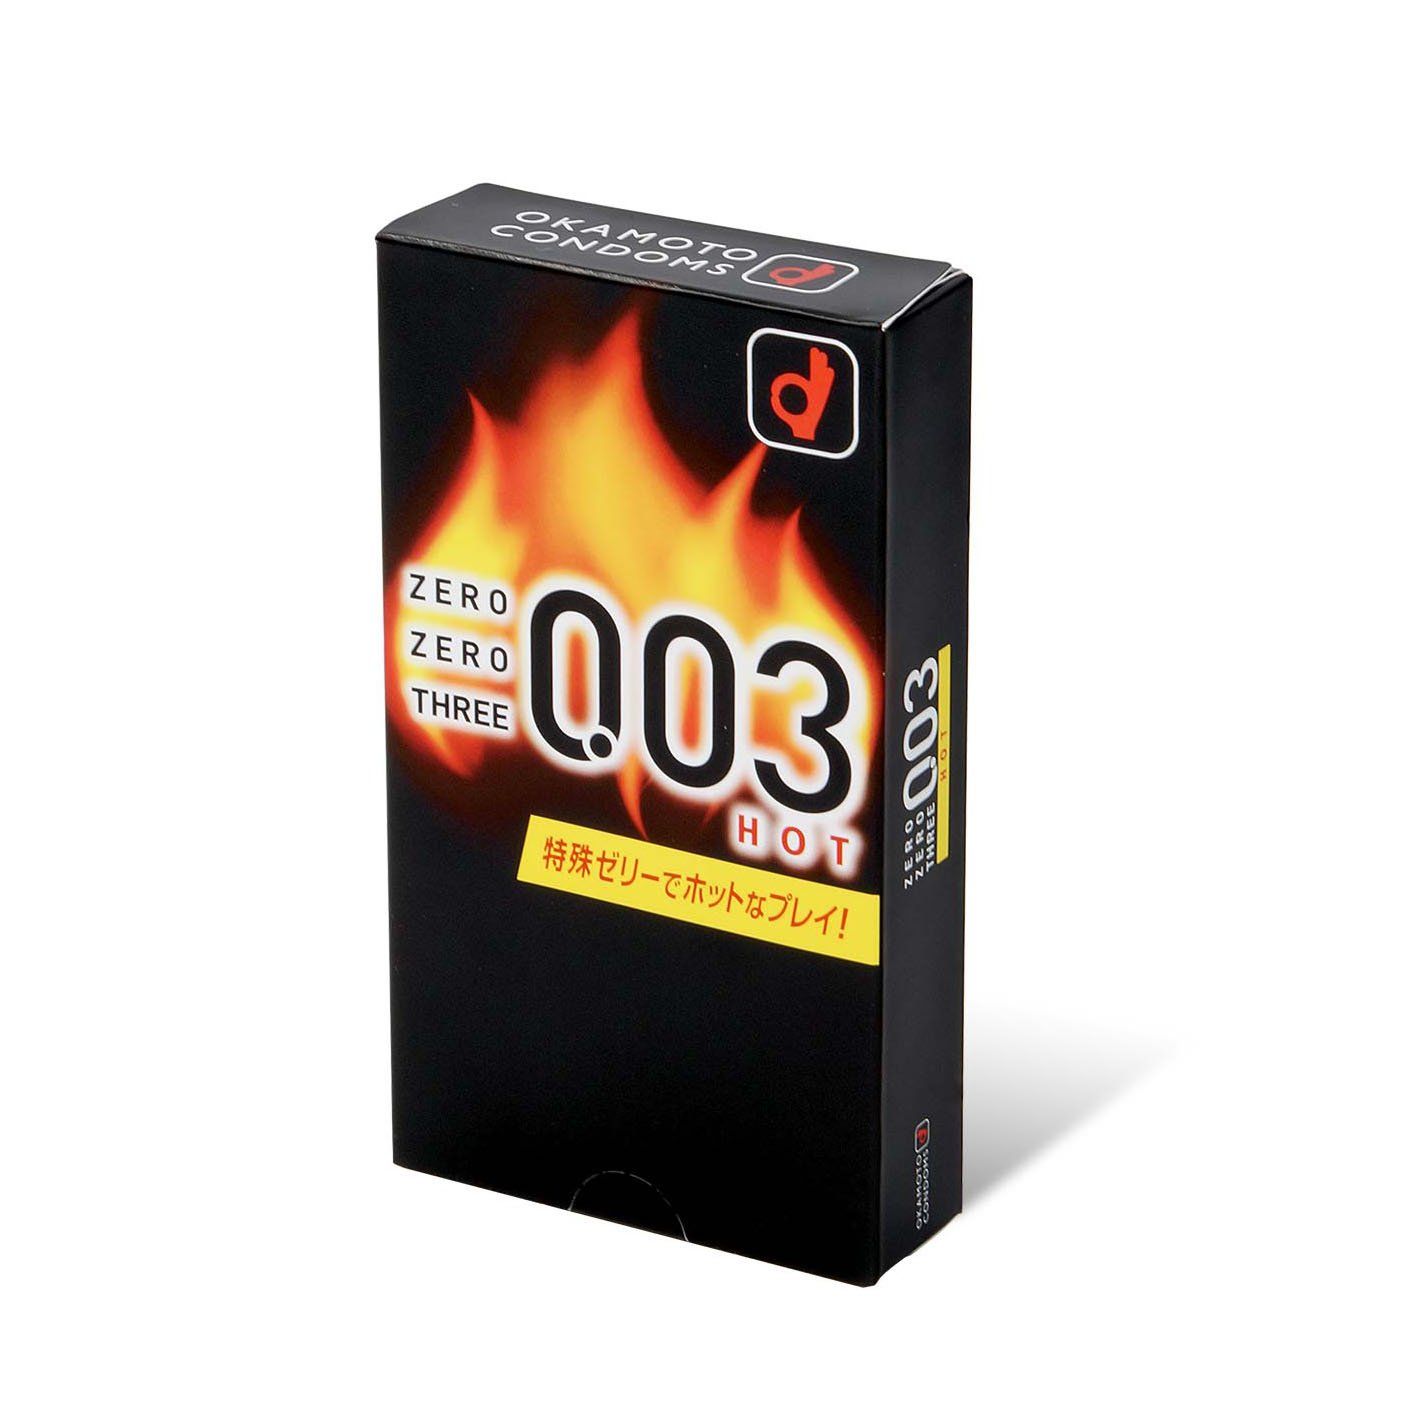 OKAMOTO 0.03 熱感 日本版 乳膠安全套 10 片裝 安全套 購買